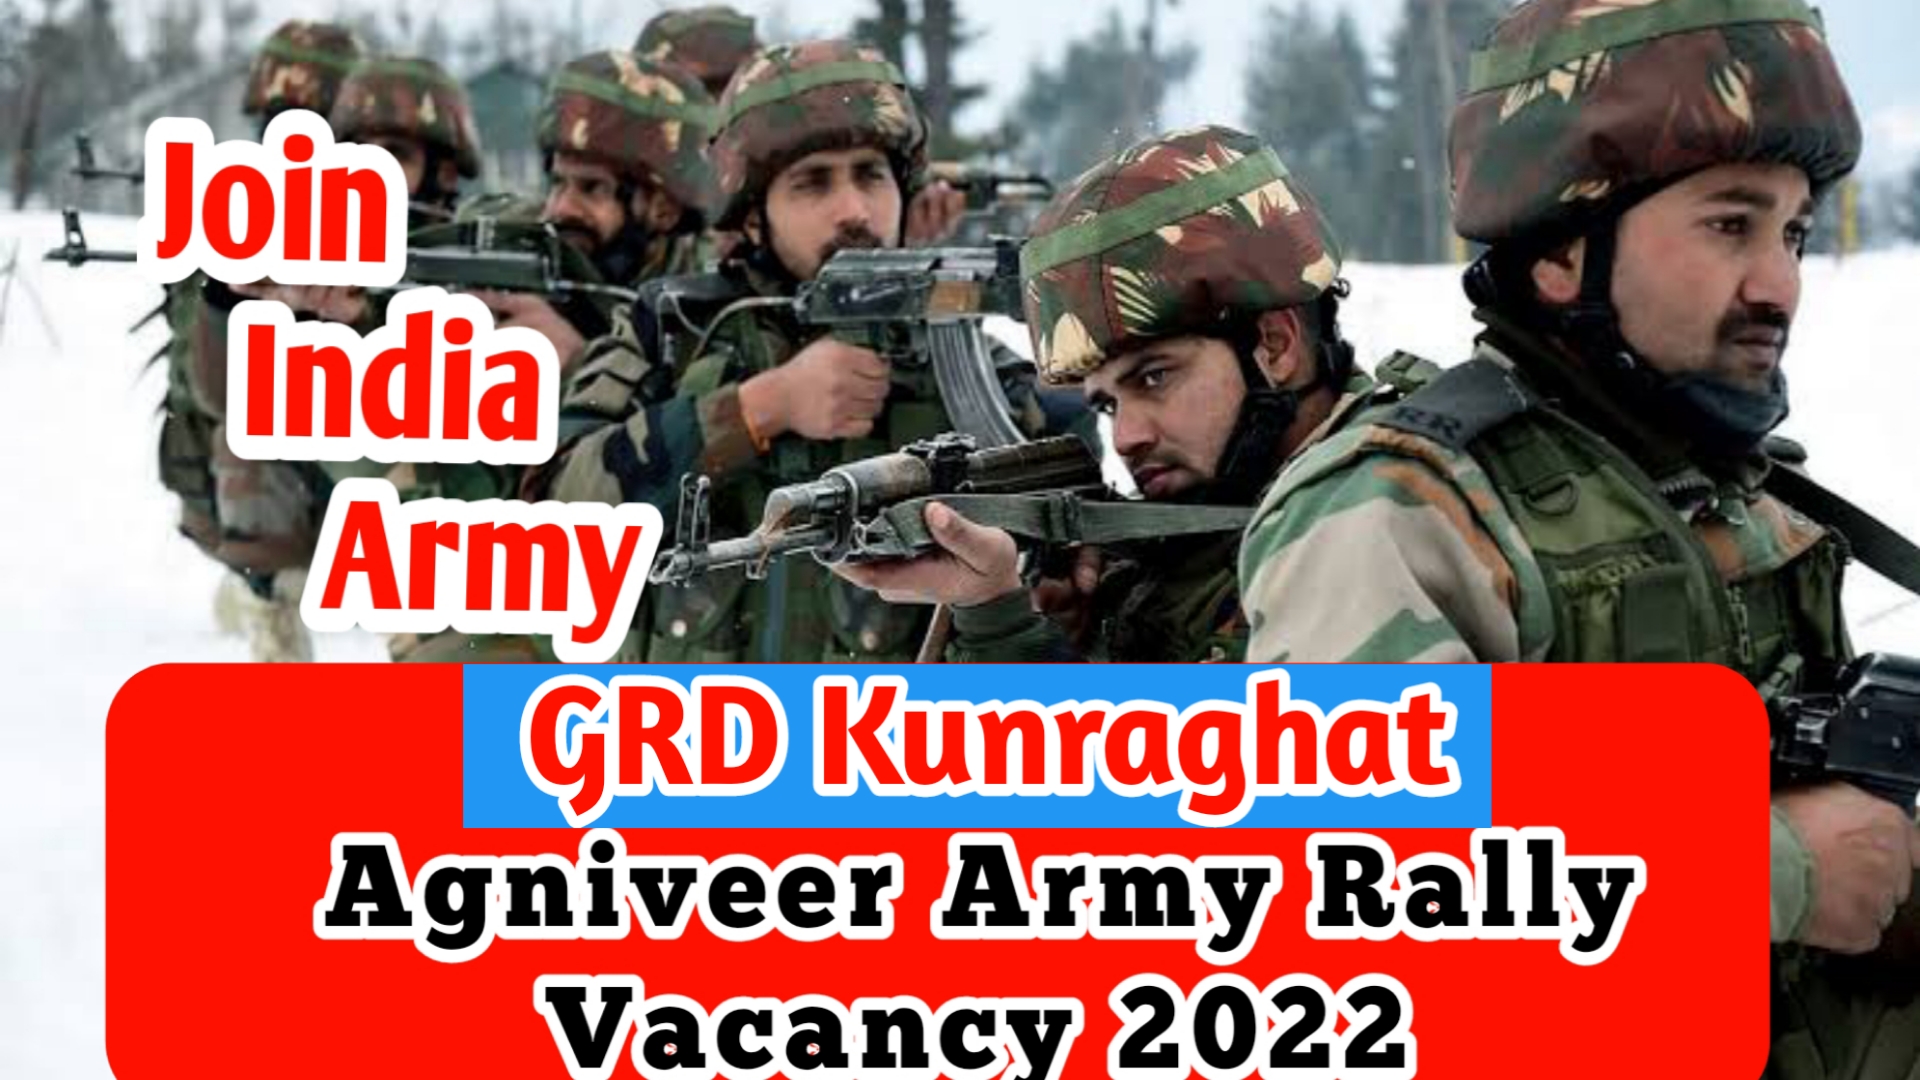 GRD Kunraghat Agniveer Army Rally Vacancy 2022